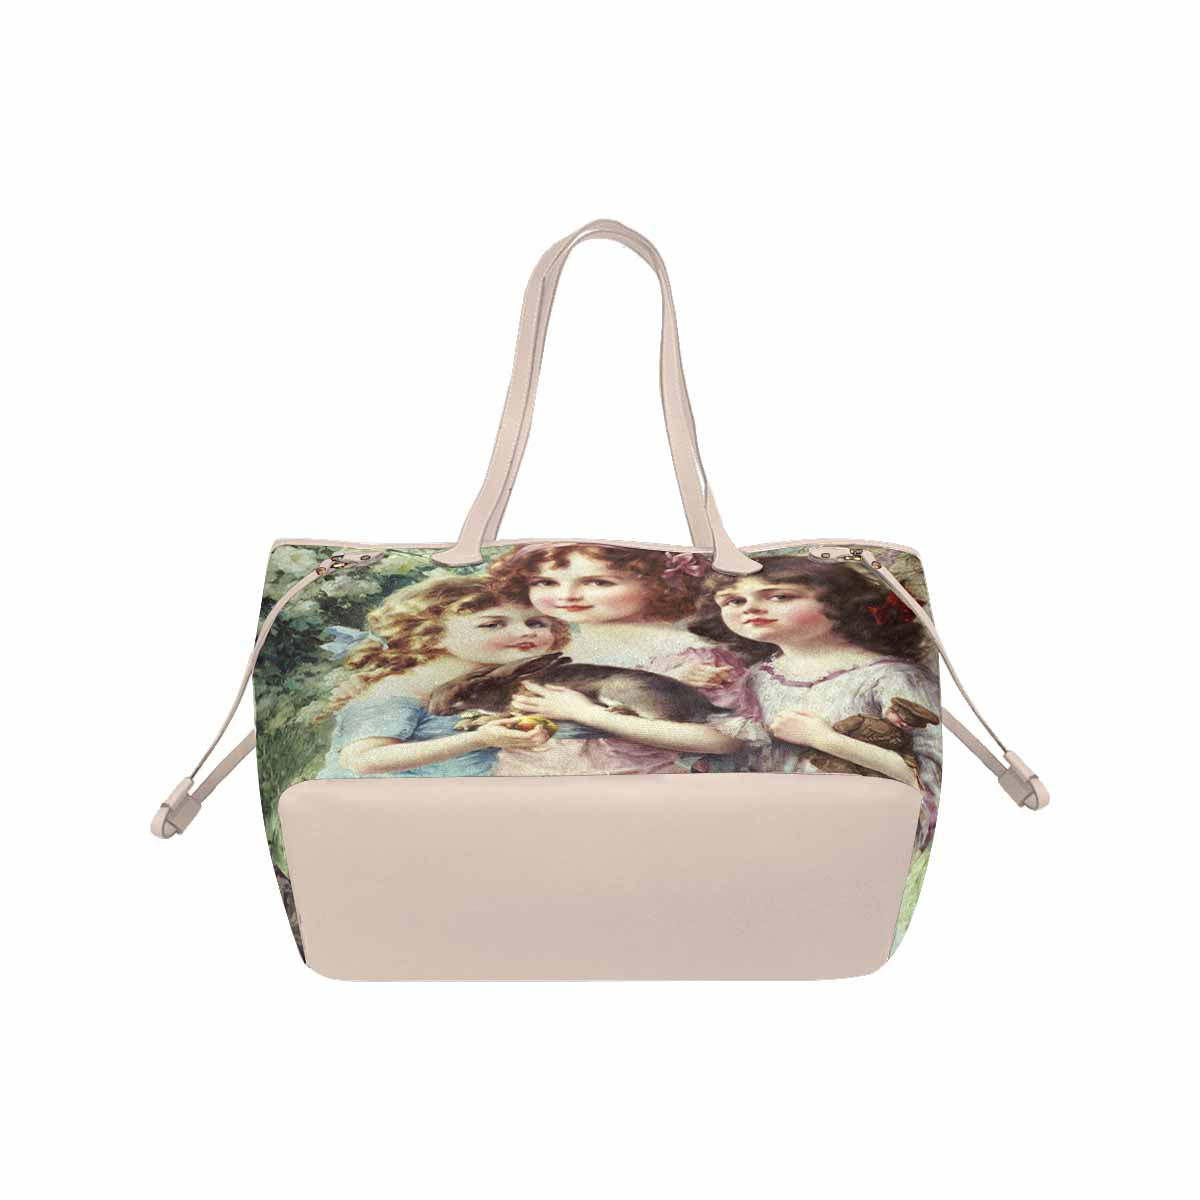 Victorian Lady Design Handbag, Model 1695361, The Three Graces #1, BEIGE/TAN TRIM